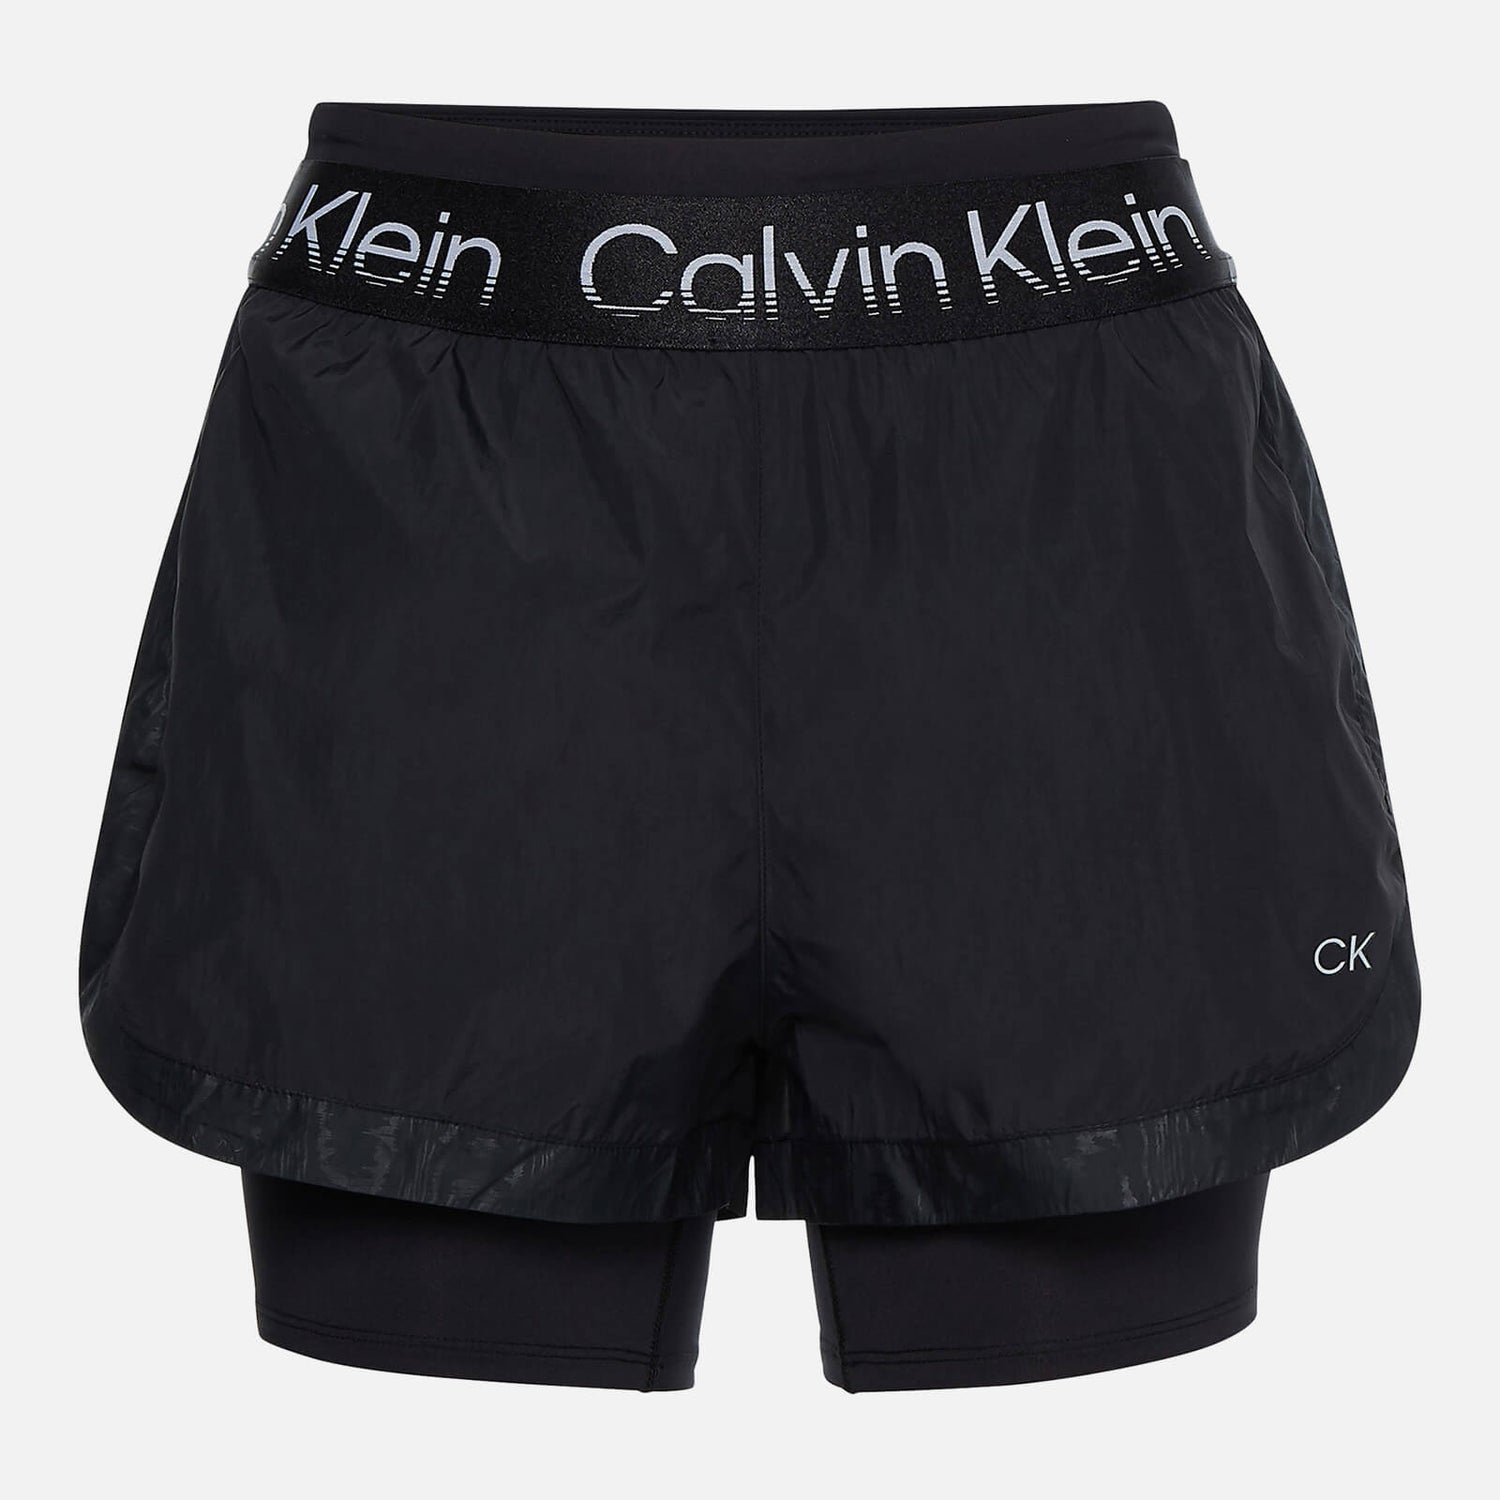 Calvin Klein Performance Women's 2-In-1 Shorts - Ck Black W/More Print Trim - XS